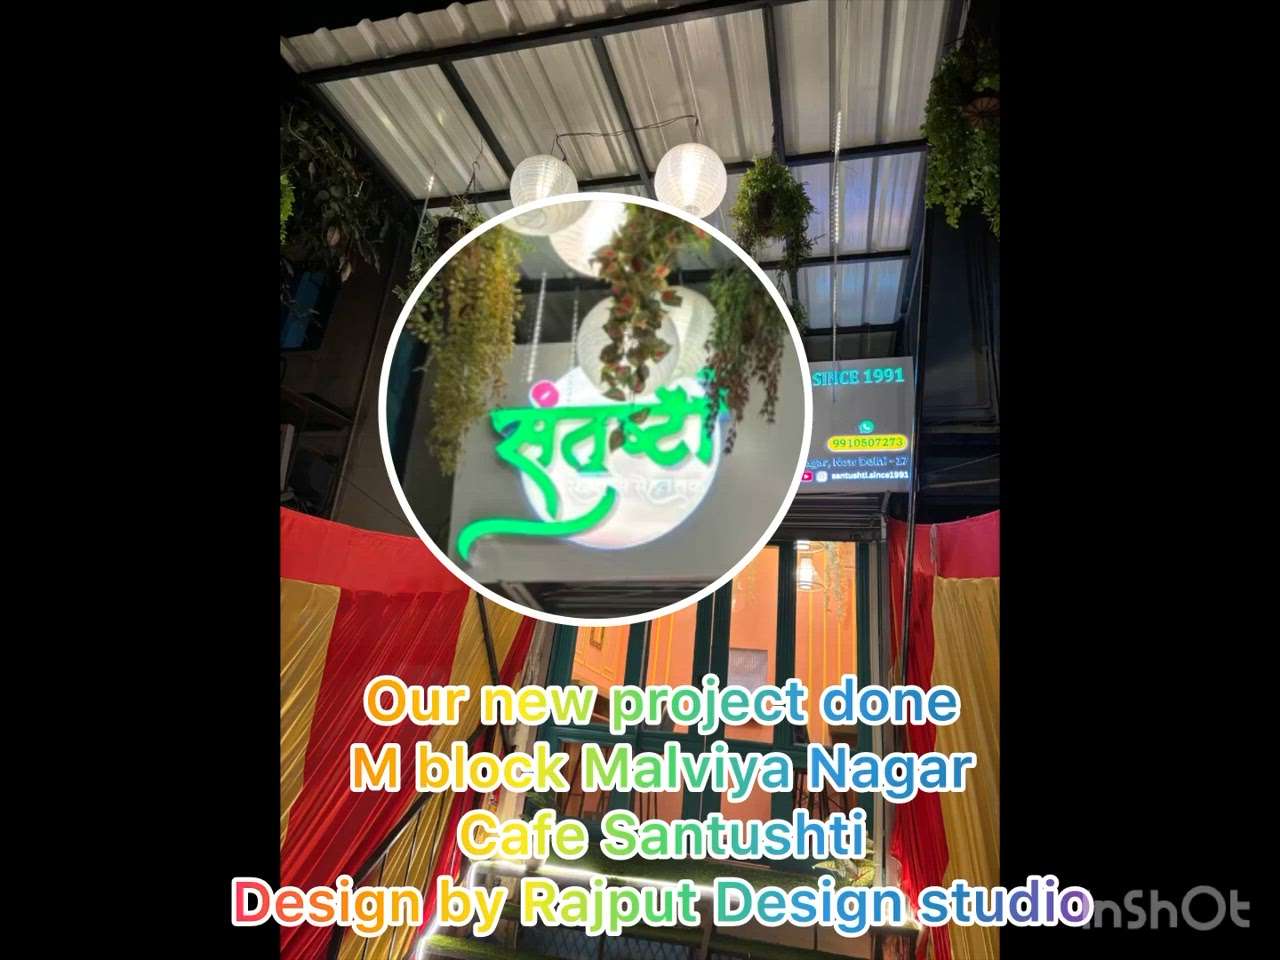 #santushti cafe add:M block Malviya Nagar New Delhi 
Design by Rajput Design studio 
#santushticafe#Rajputdesignstudio#interiorproject#teamwork#moderndesigntheme.